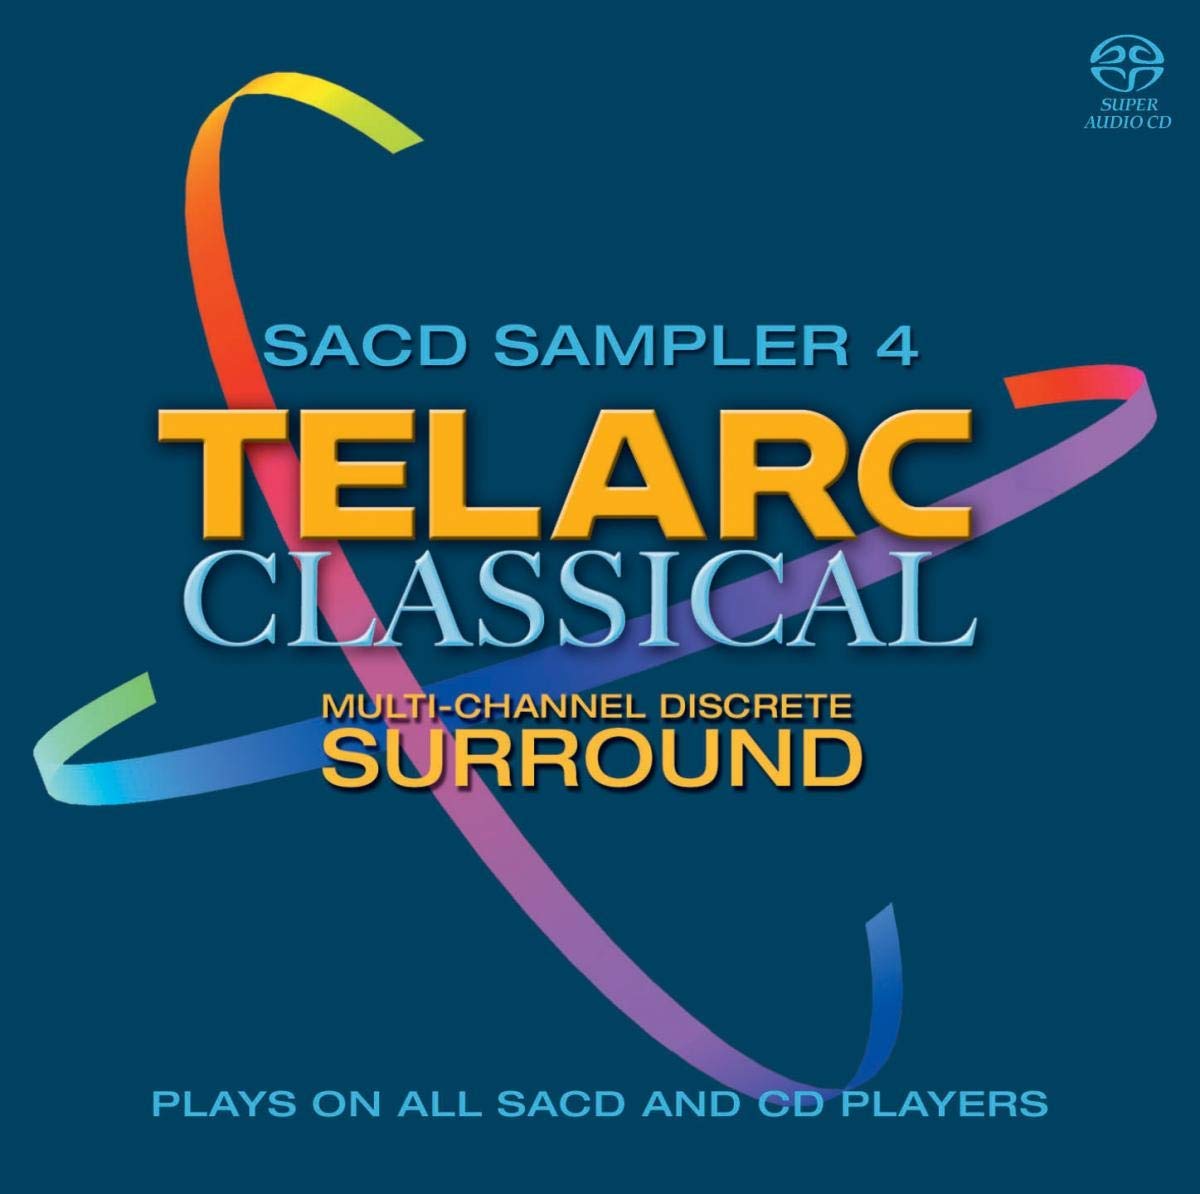 TELARC CLASSICAL SACD SAMPLER 4